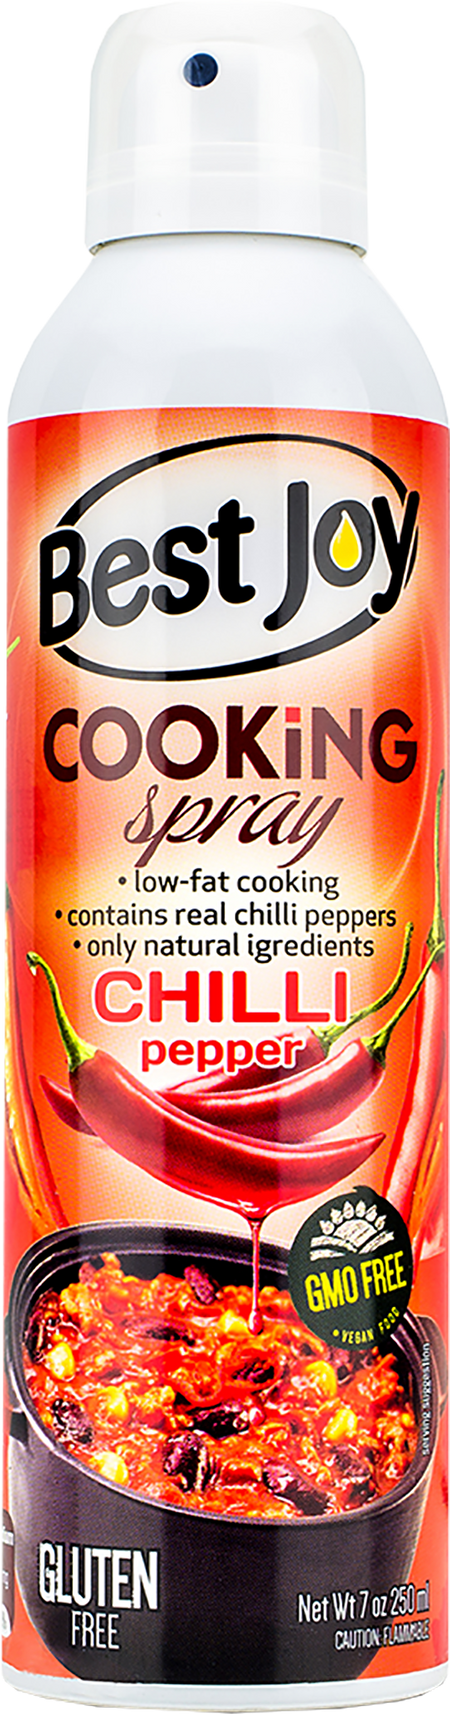 Chilli / Cooking Spray - BadiZdrav.BG